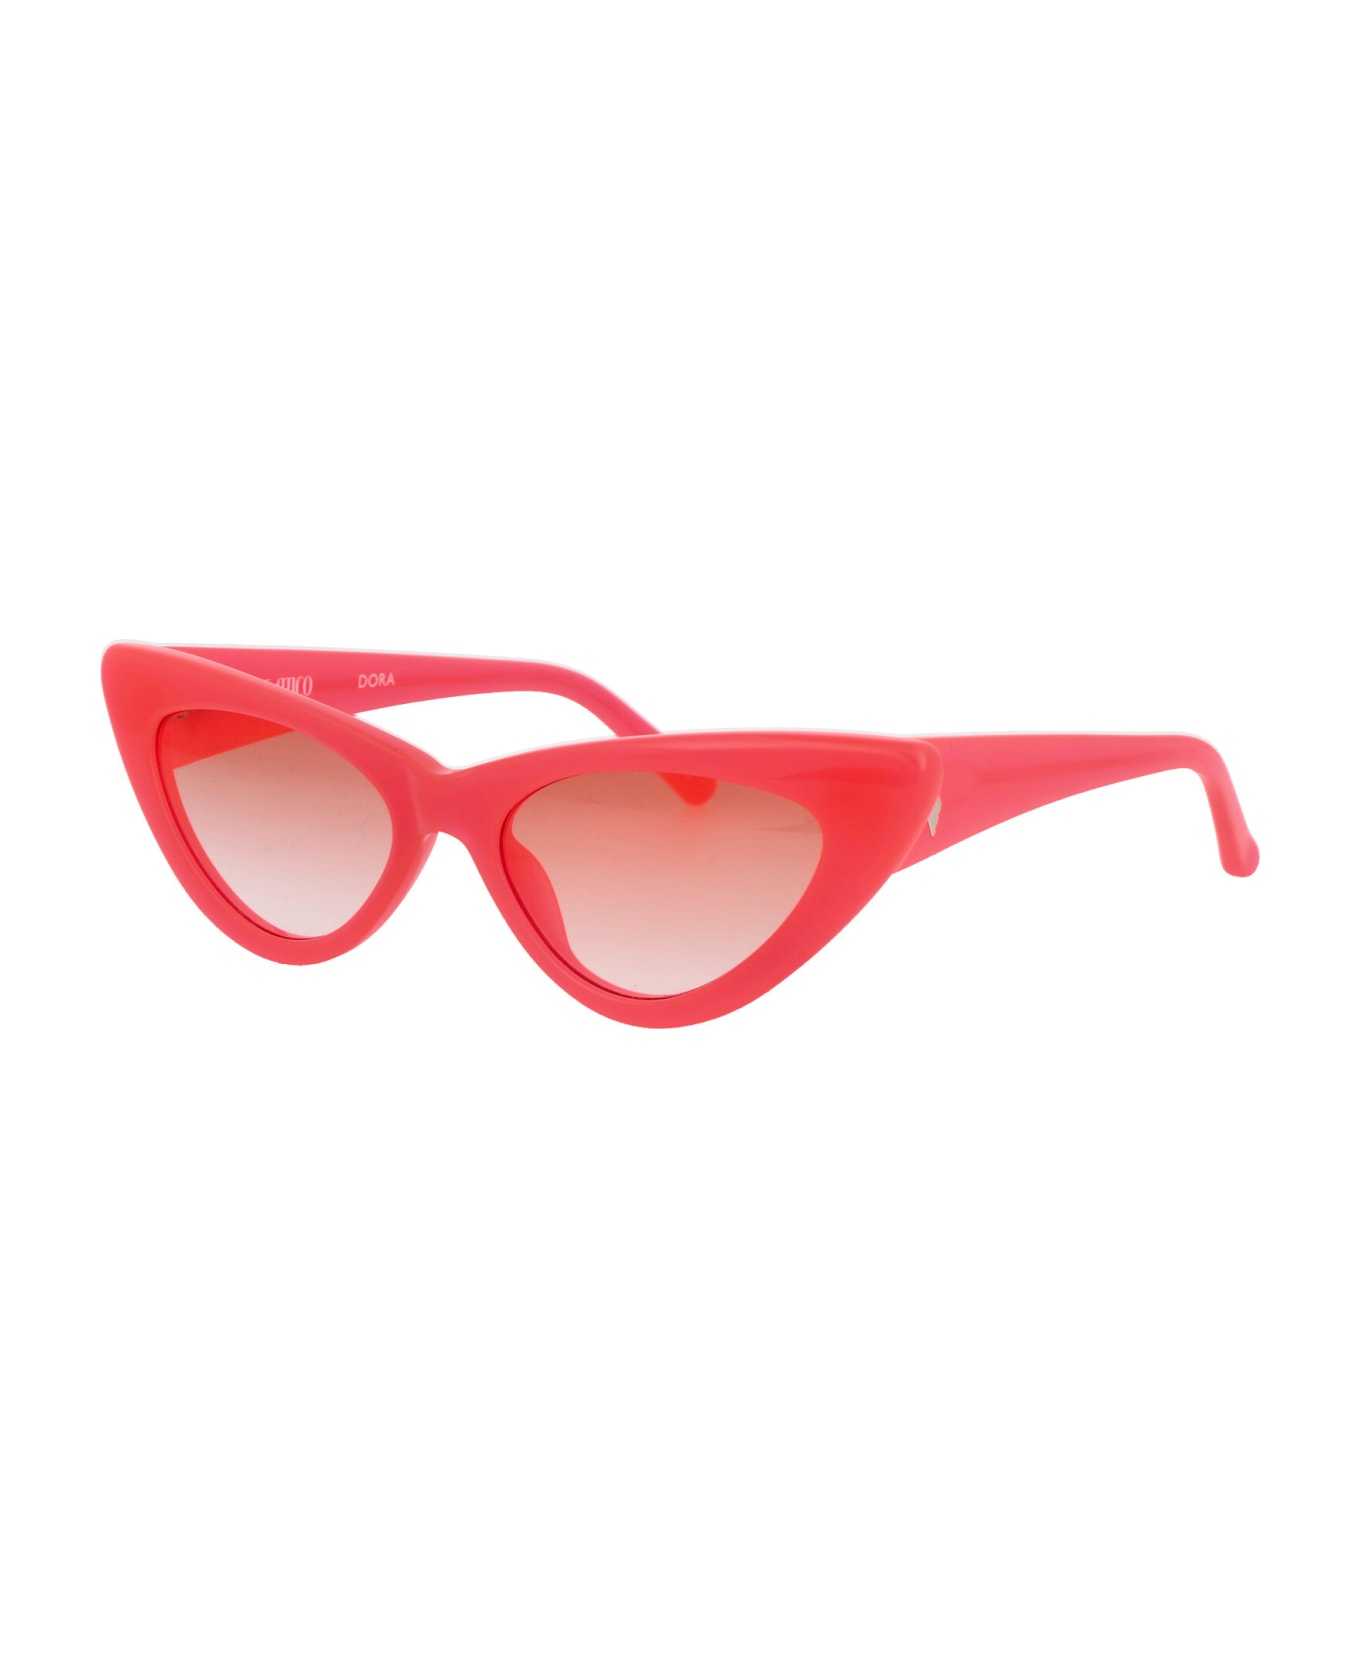 The Attico Dora Sunglasses - NEONPINK/SILVER/ORANGEGRAD サングラス